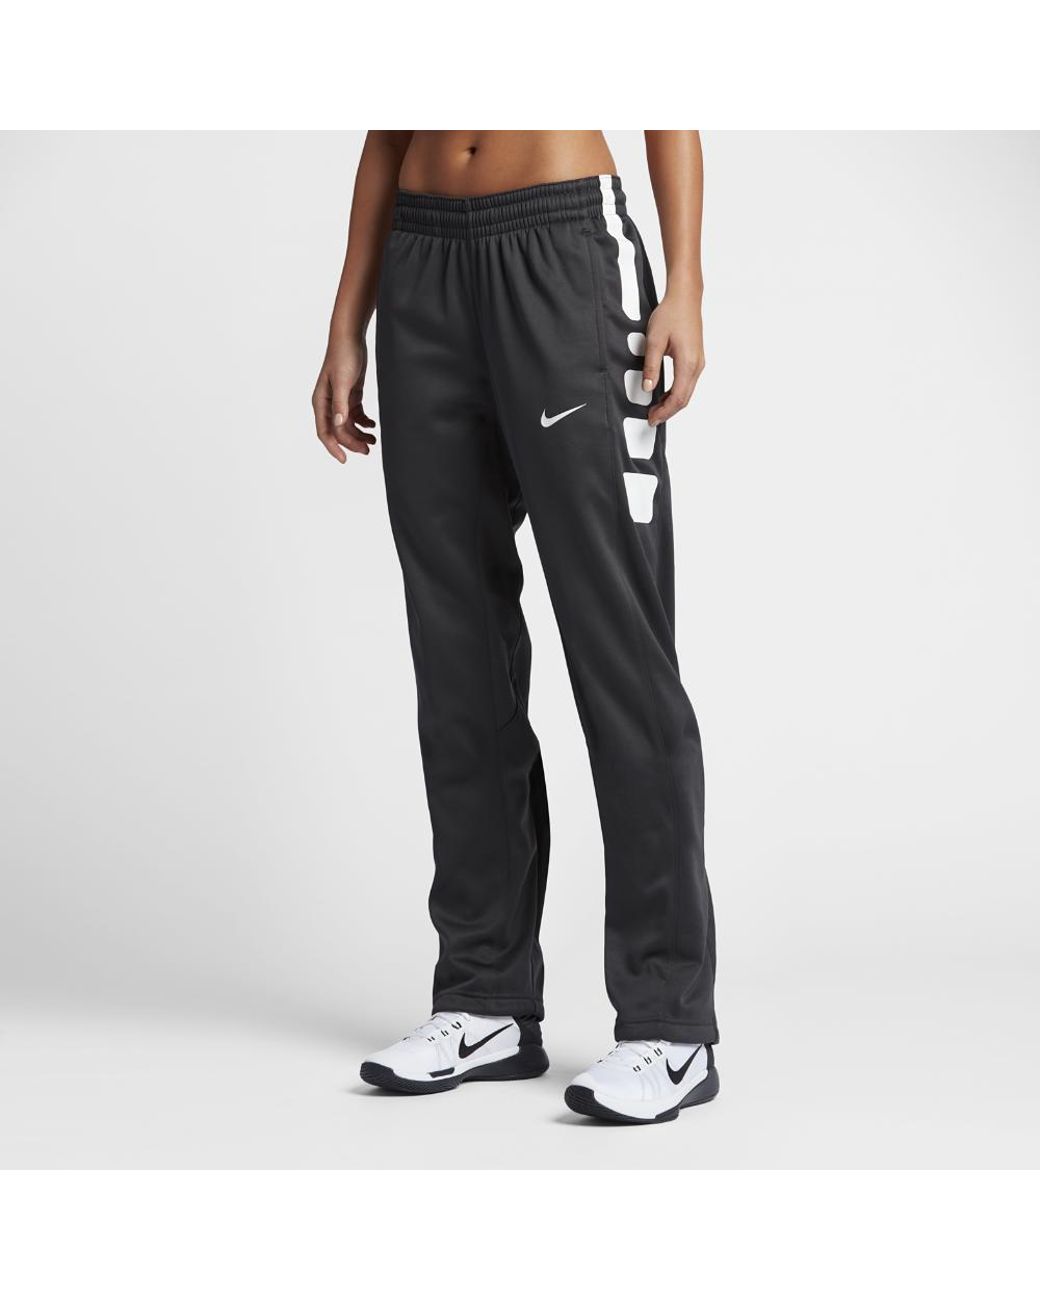 Nike Synthetic Elite Women's Basketball Pants in Black | Lyst